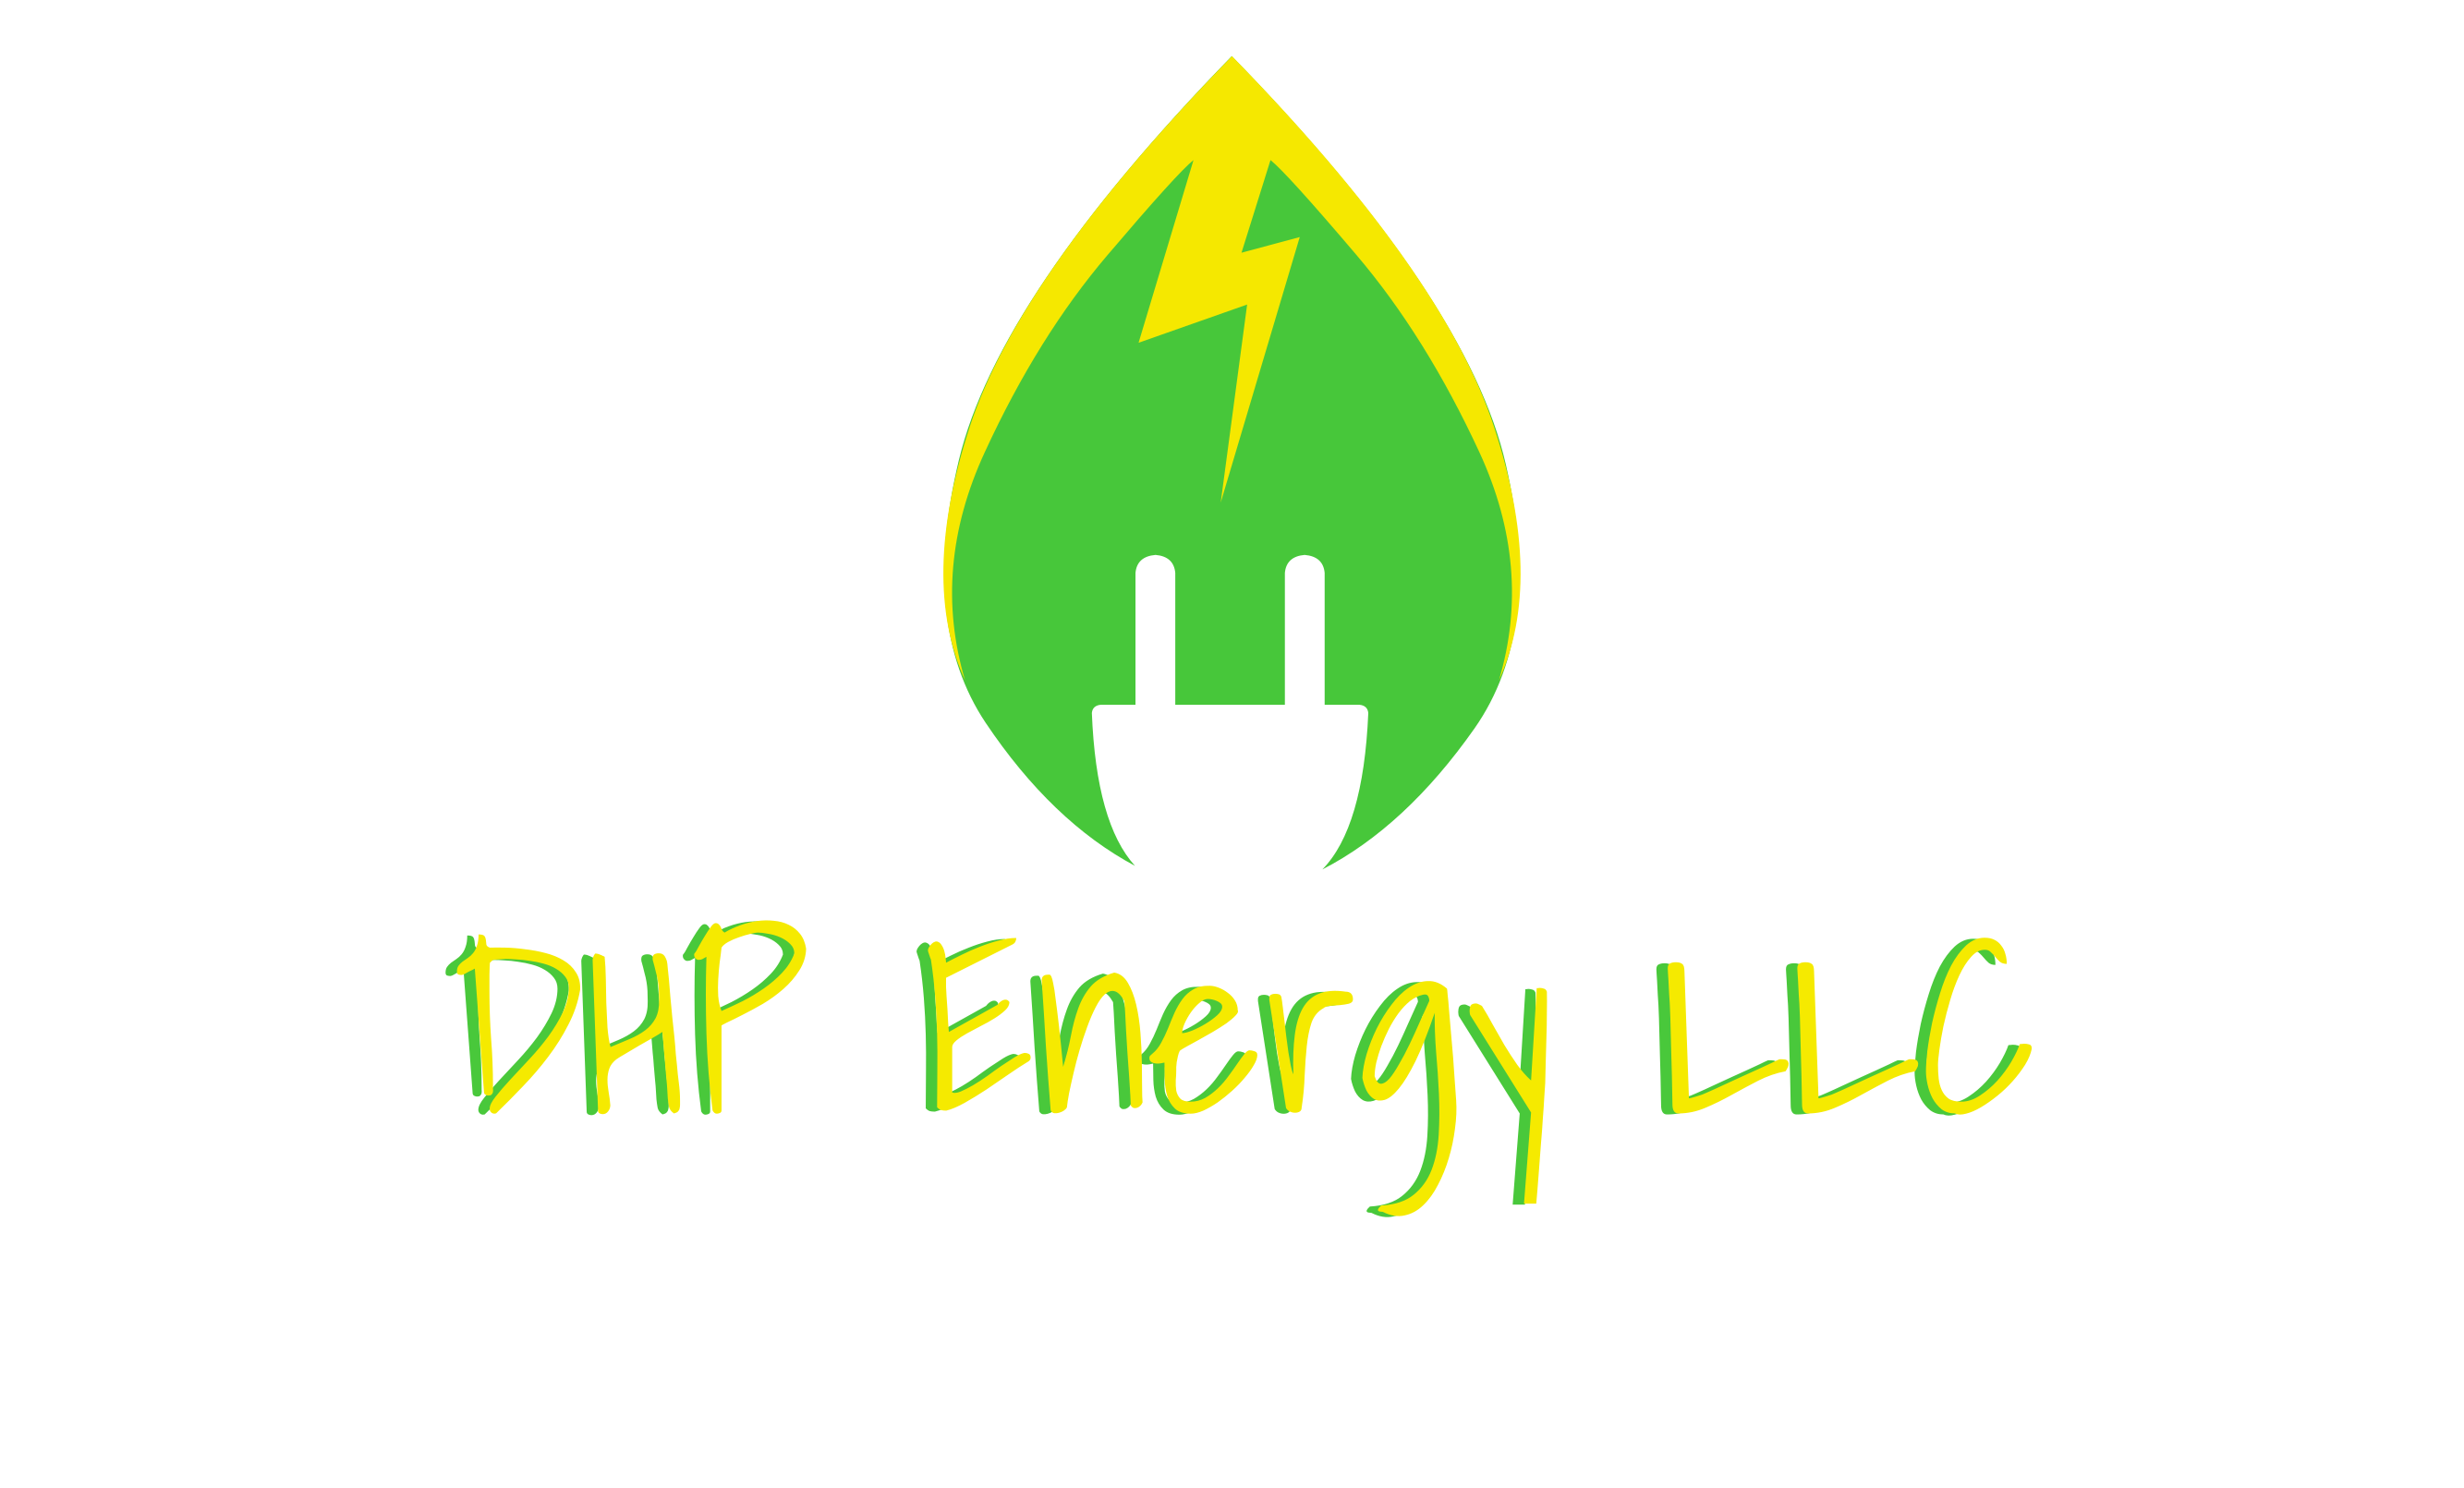 DHP Energy LLC company logo